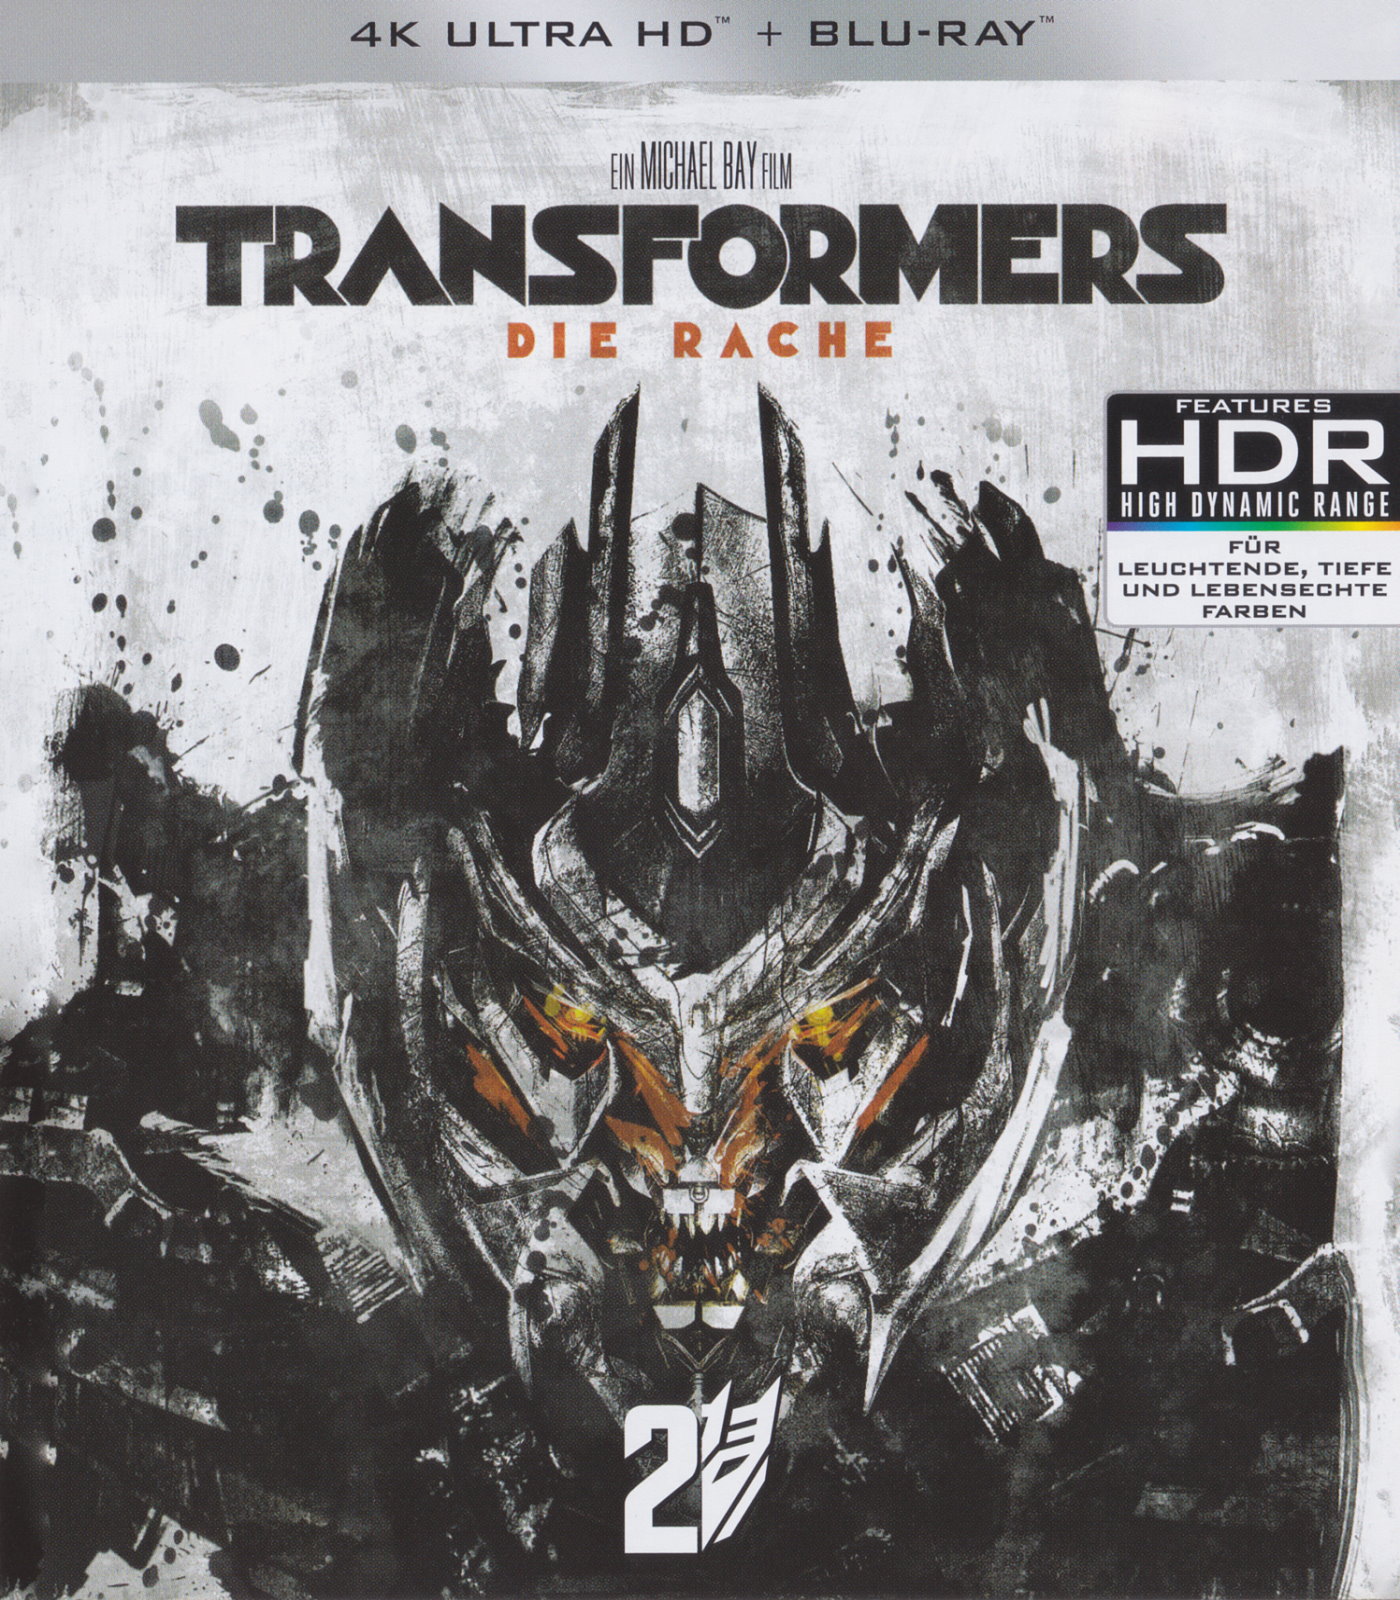 Cover - Transformers - Die Rache.jpg